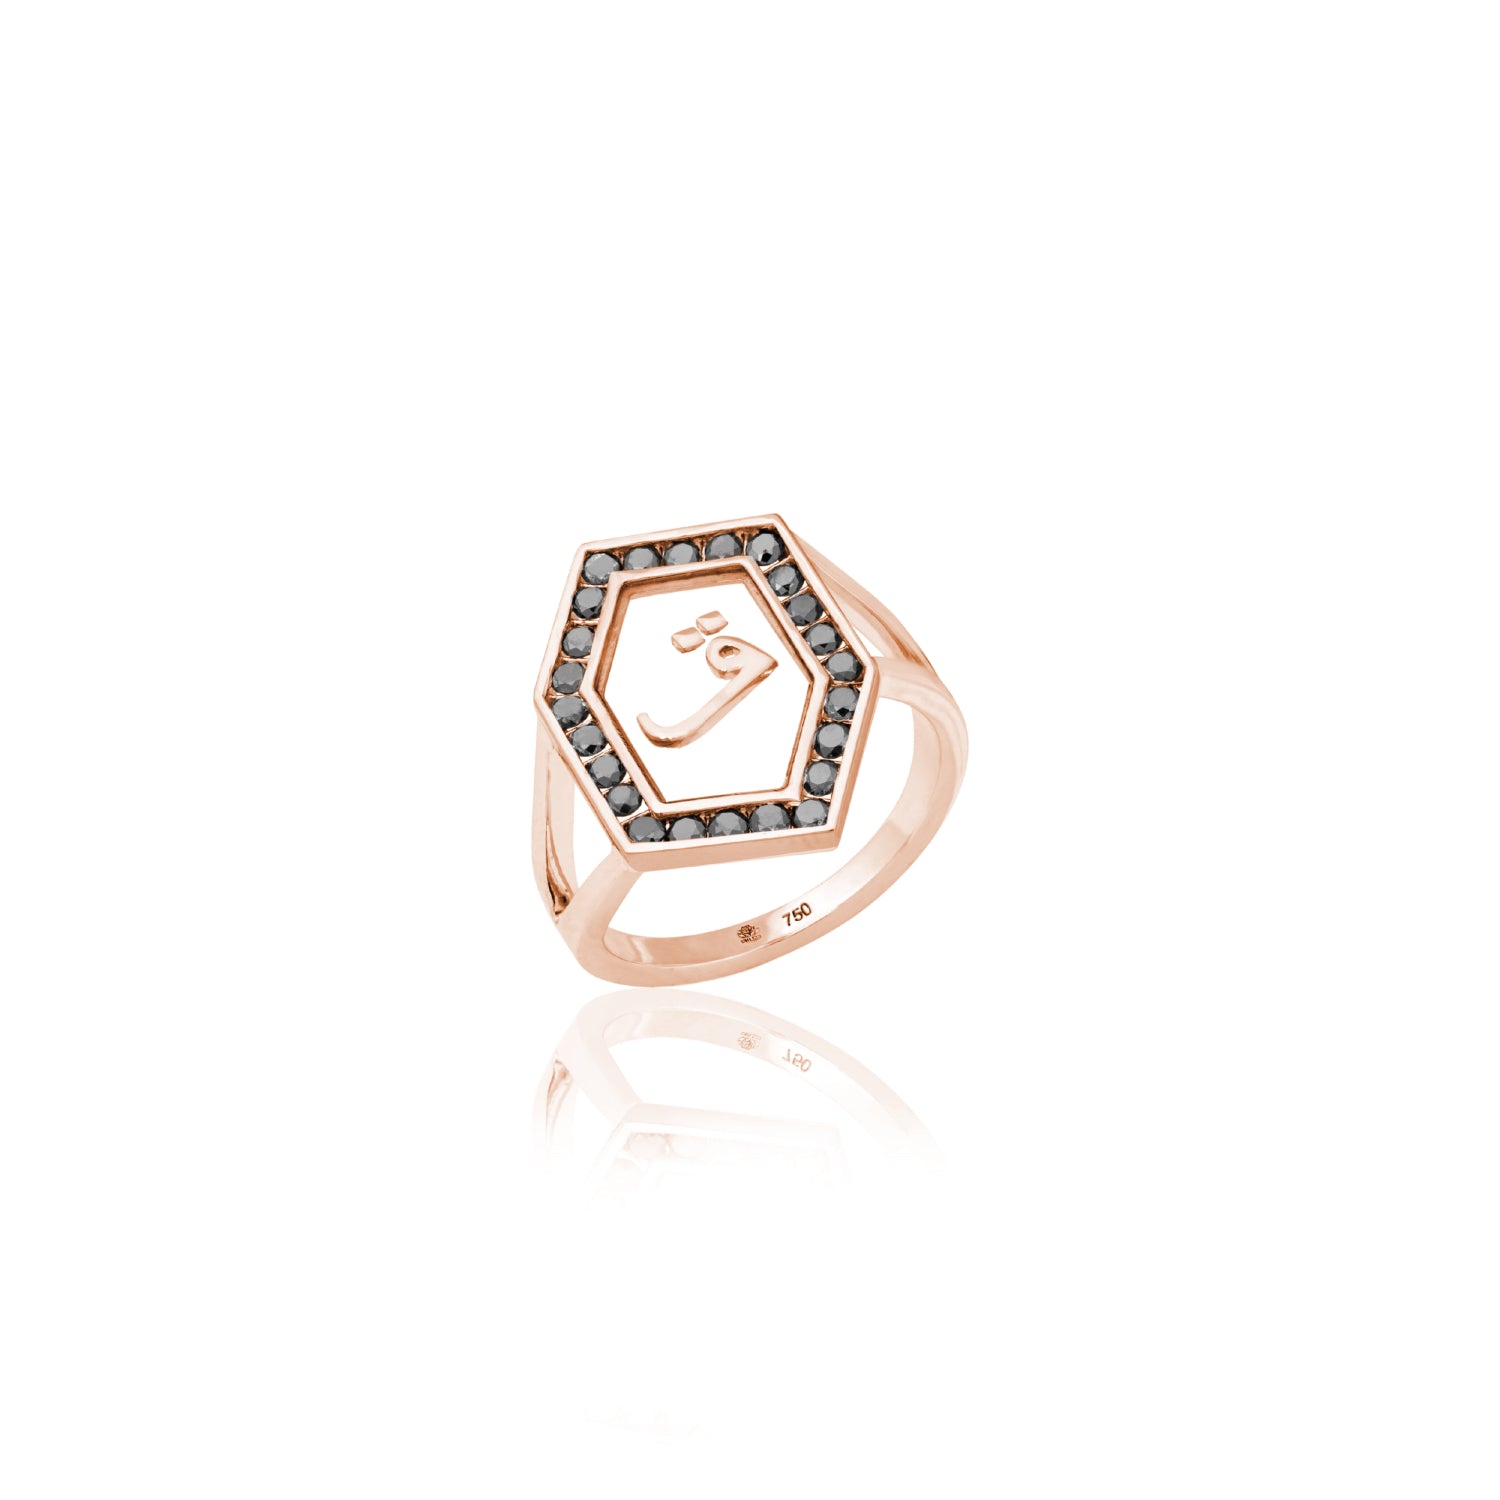 Qamoos 1.0 Letter ق Black Diamond Ring in Rose Gold